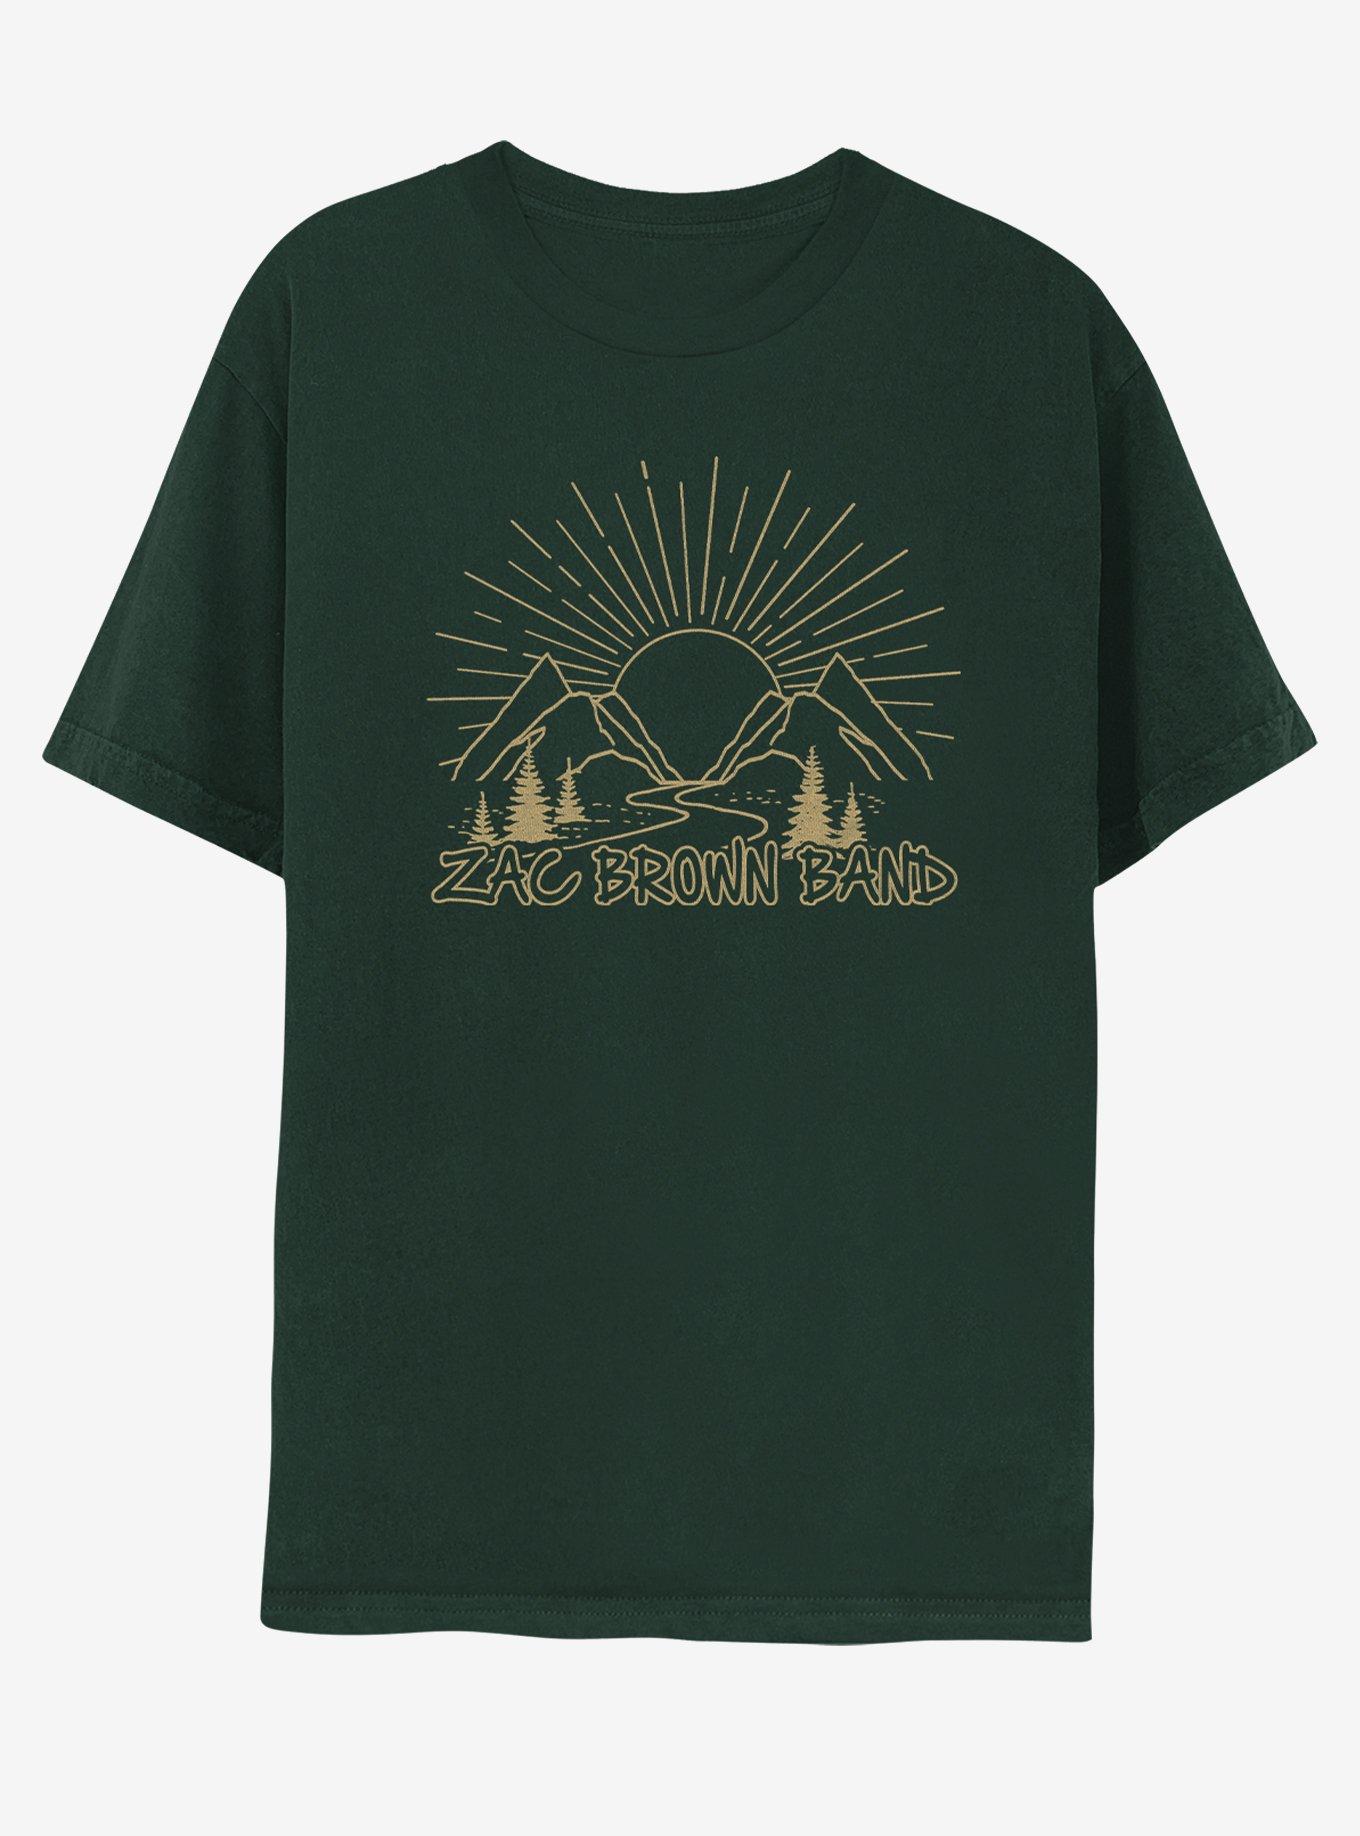 Zac Brown Band Mountains Boyfriend Fit Girls T-Shirt, FOREST GREEN, hi-res